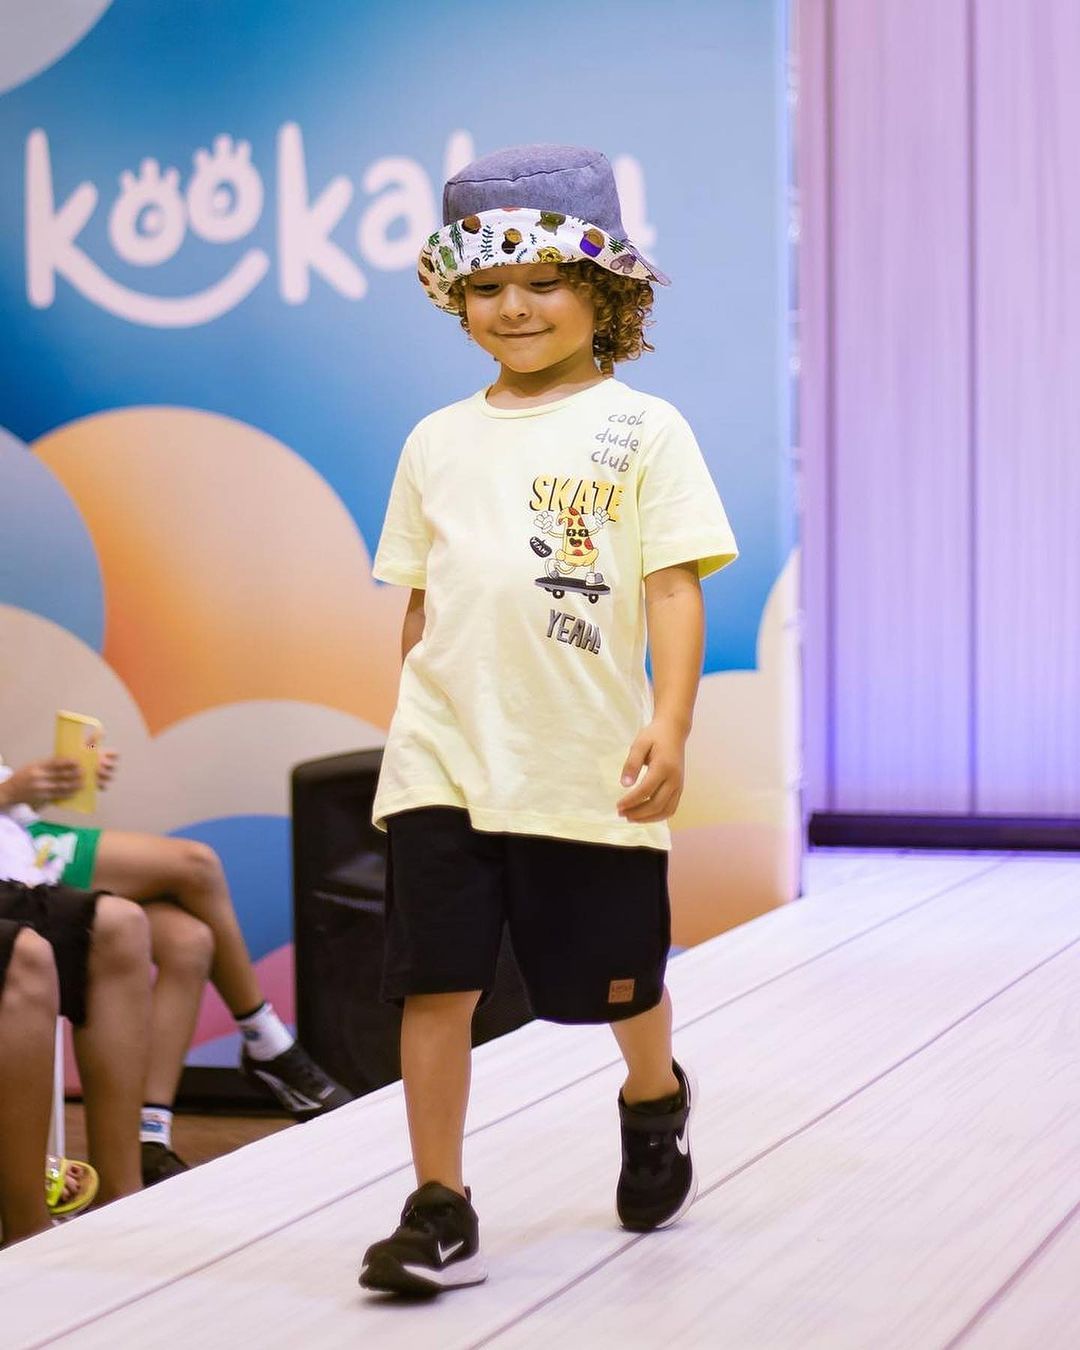 Kookabu | Agência de Modelos Infantil